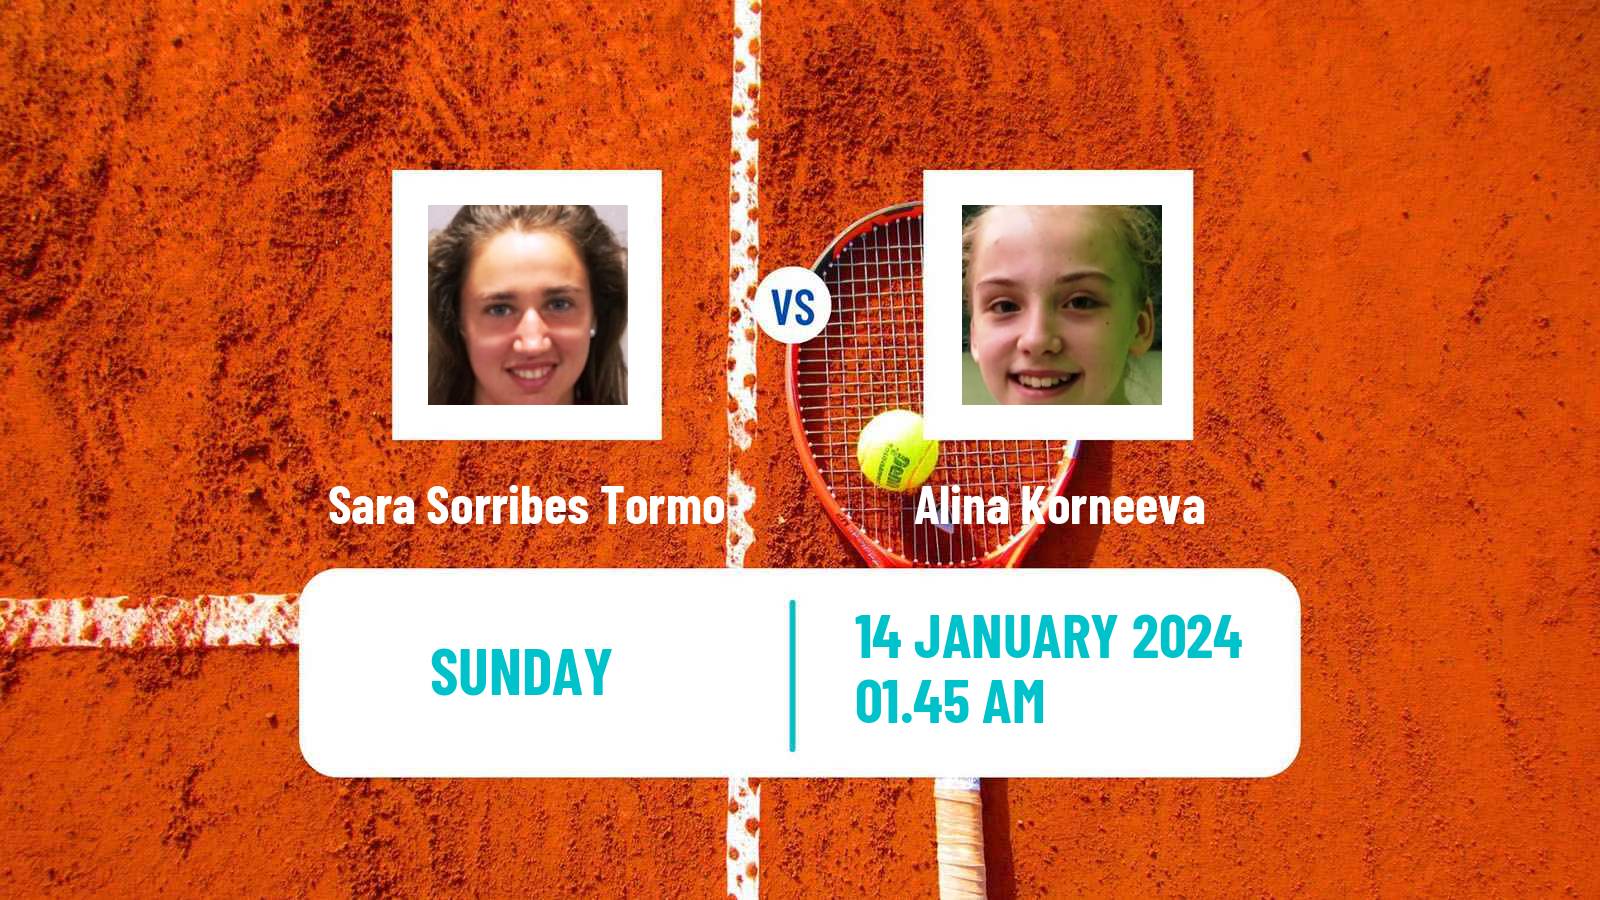 Tennis WTA Australian Open Sara Sorribes Tormo - Alina Korneeva